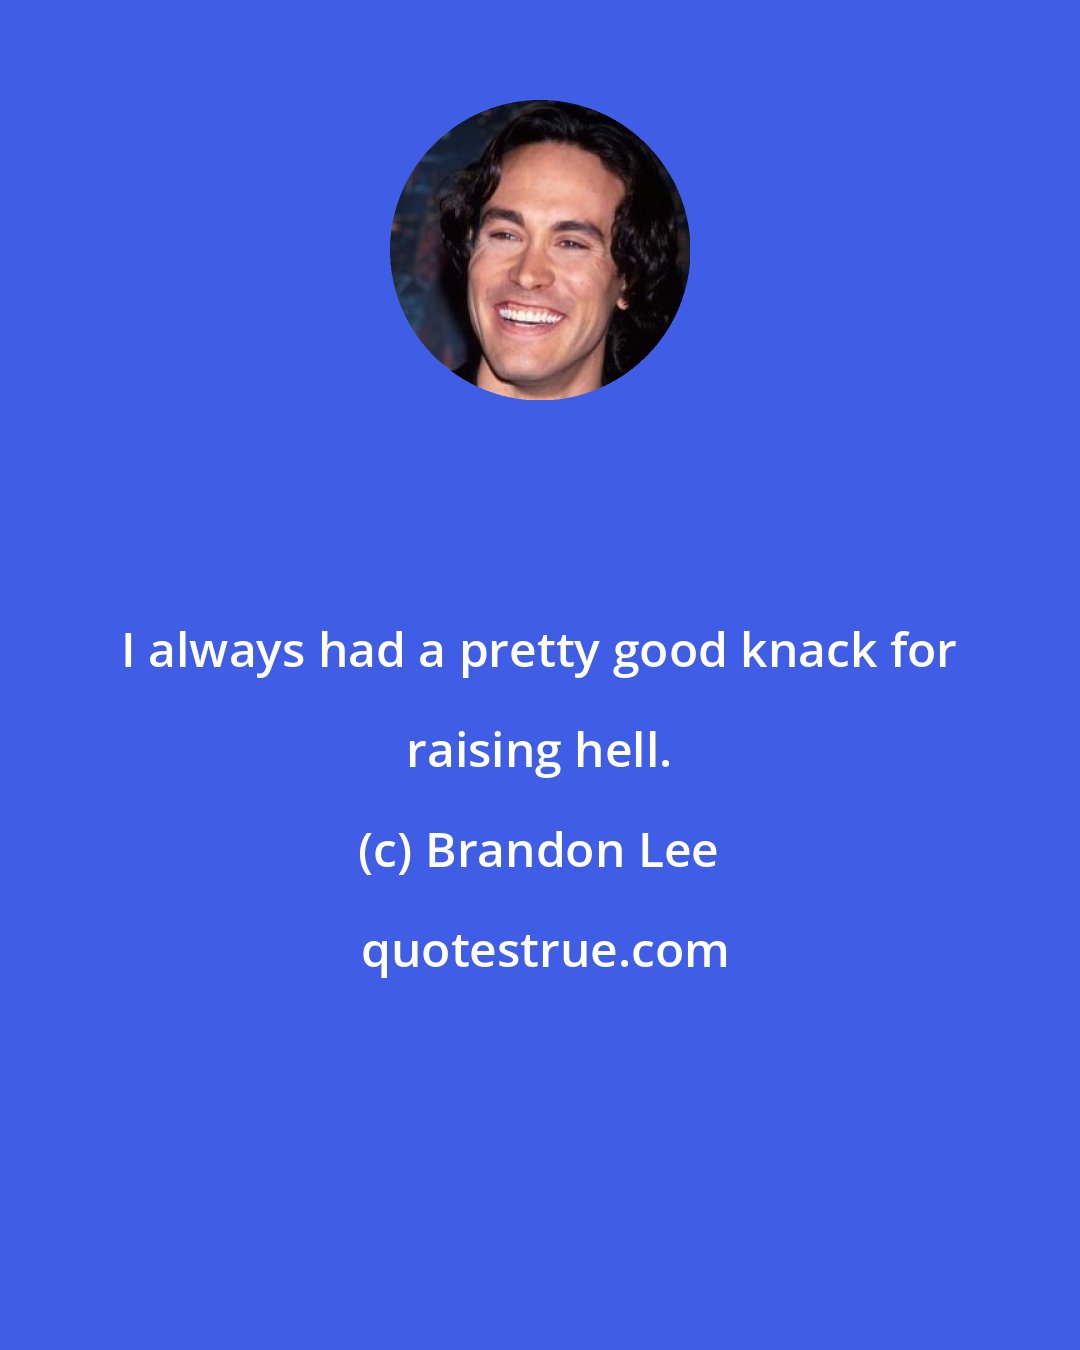 Brandon Lee: I always had a pretty good knack for raising hell.